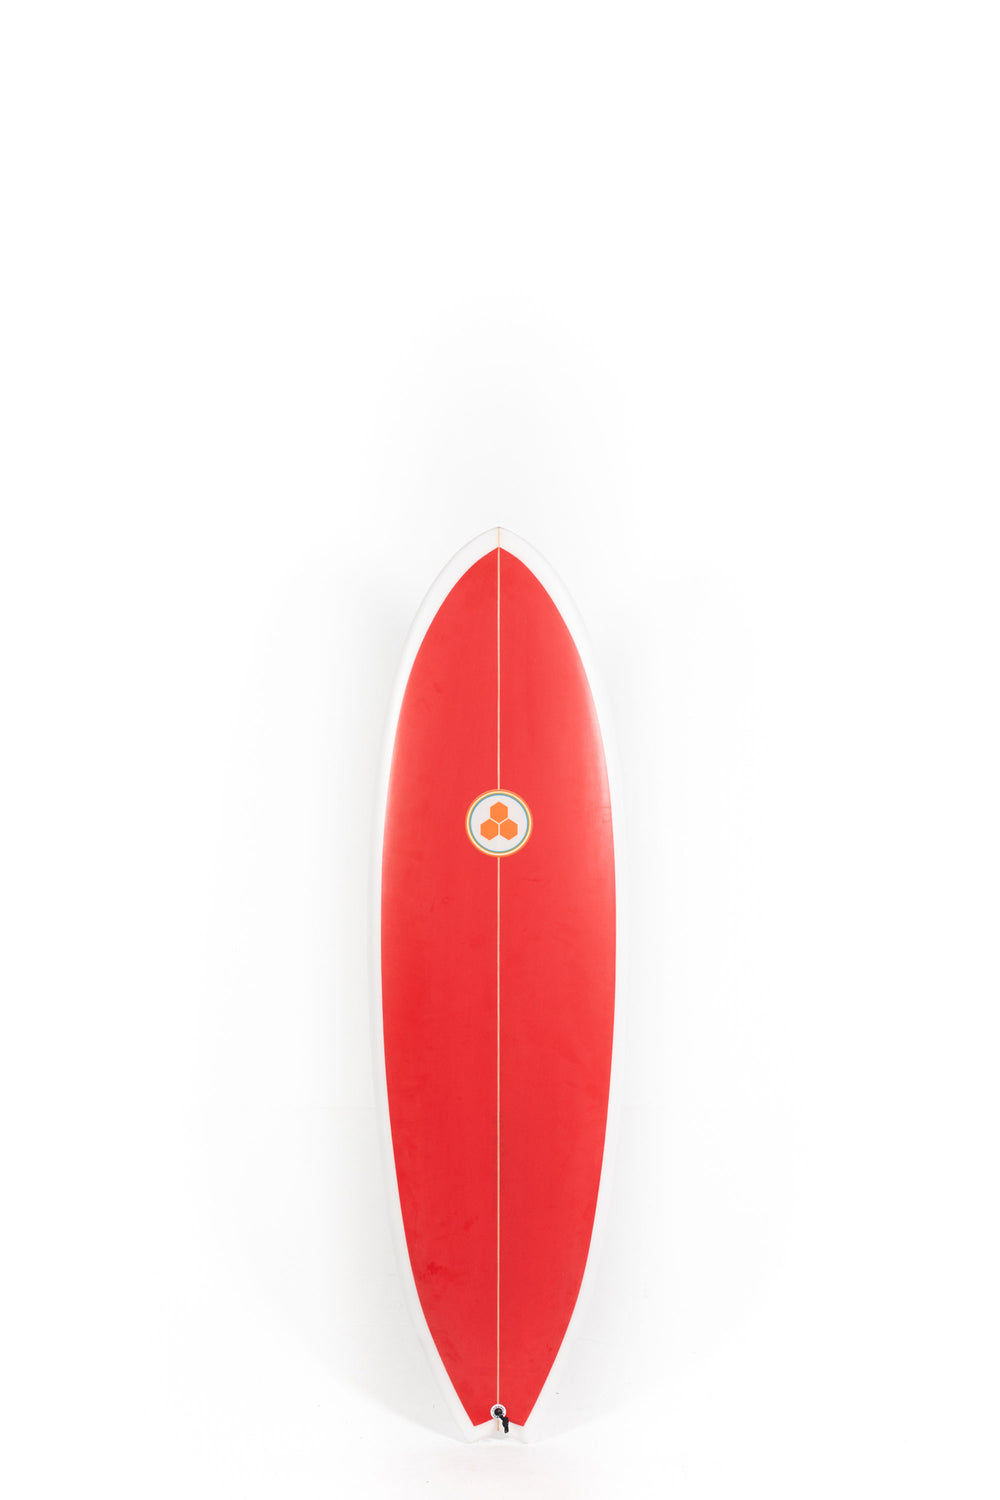 Pukas Surf Shop - Channel Islands - G-Skate by Al Merrick - 5'8